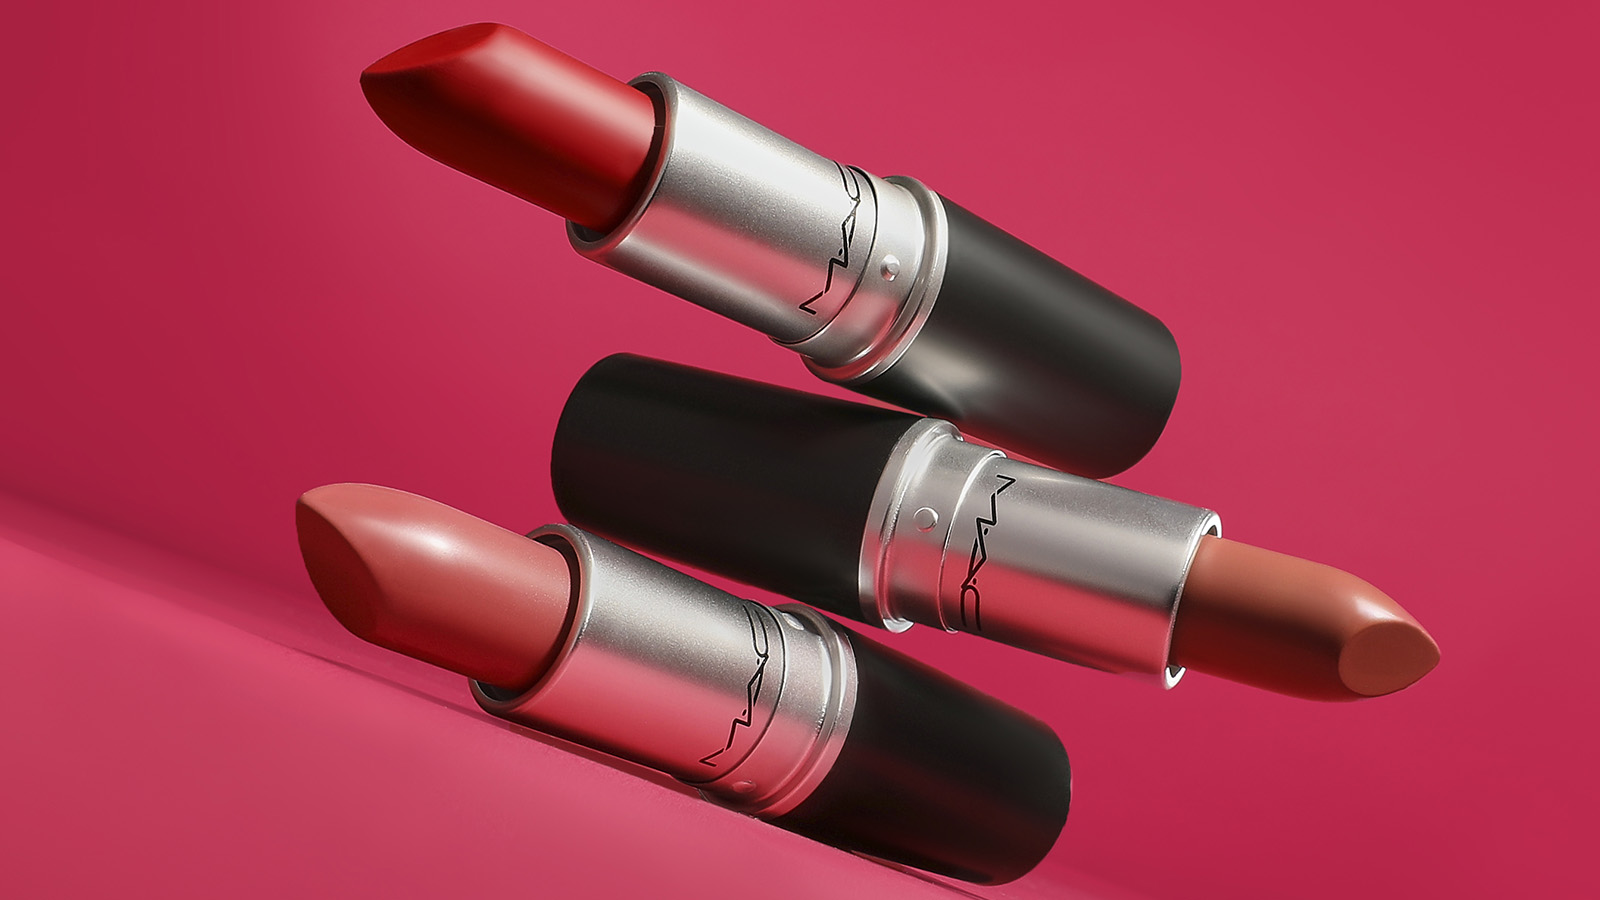 The Best MAC Lipsticks - Beauty Bay Edited